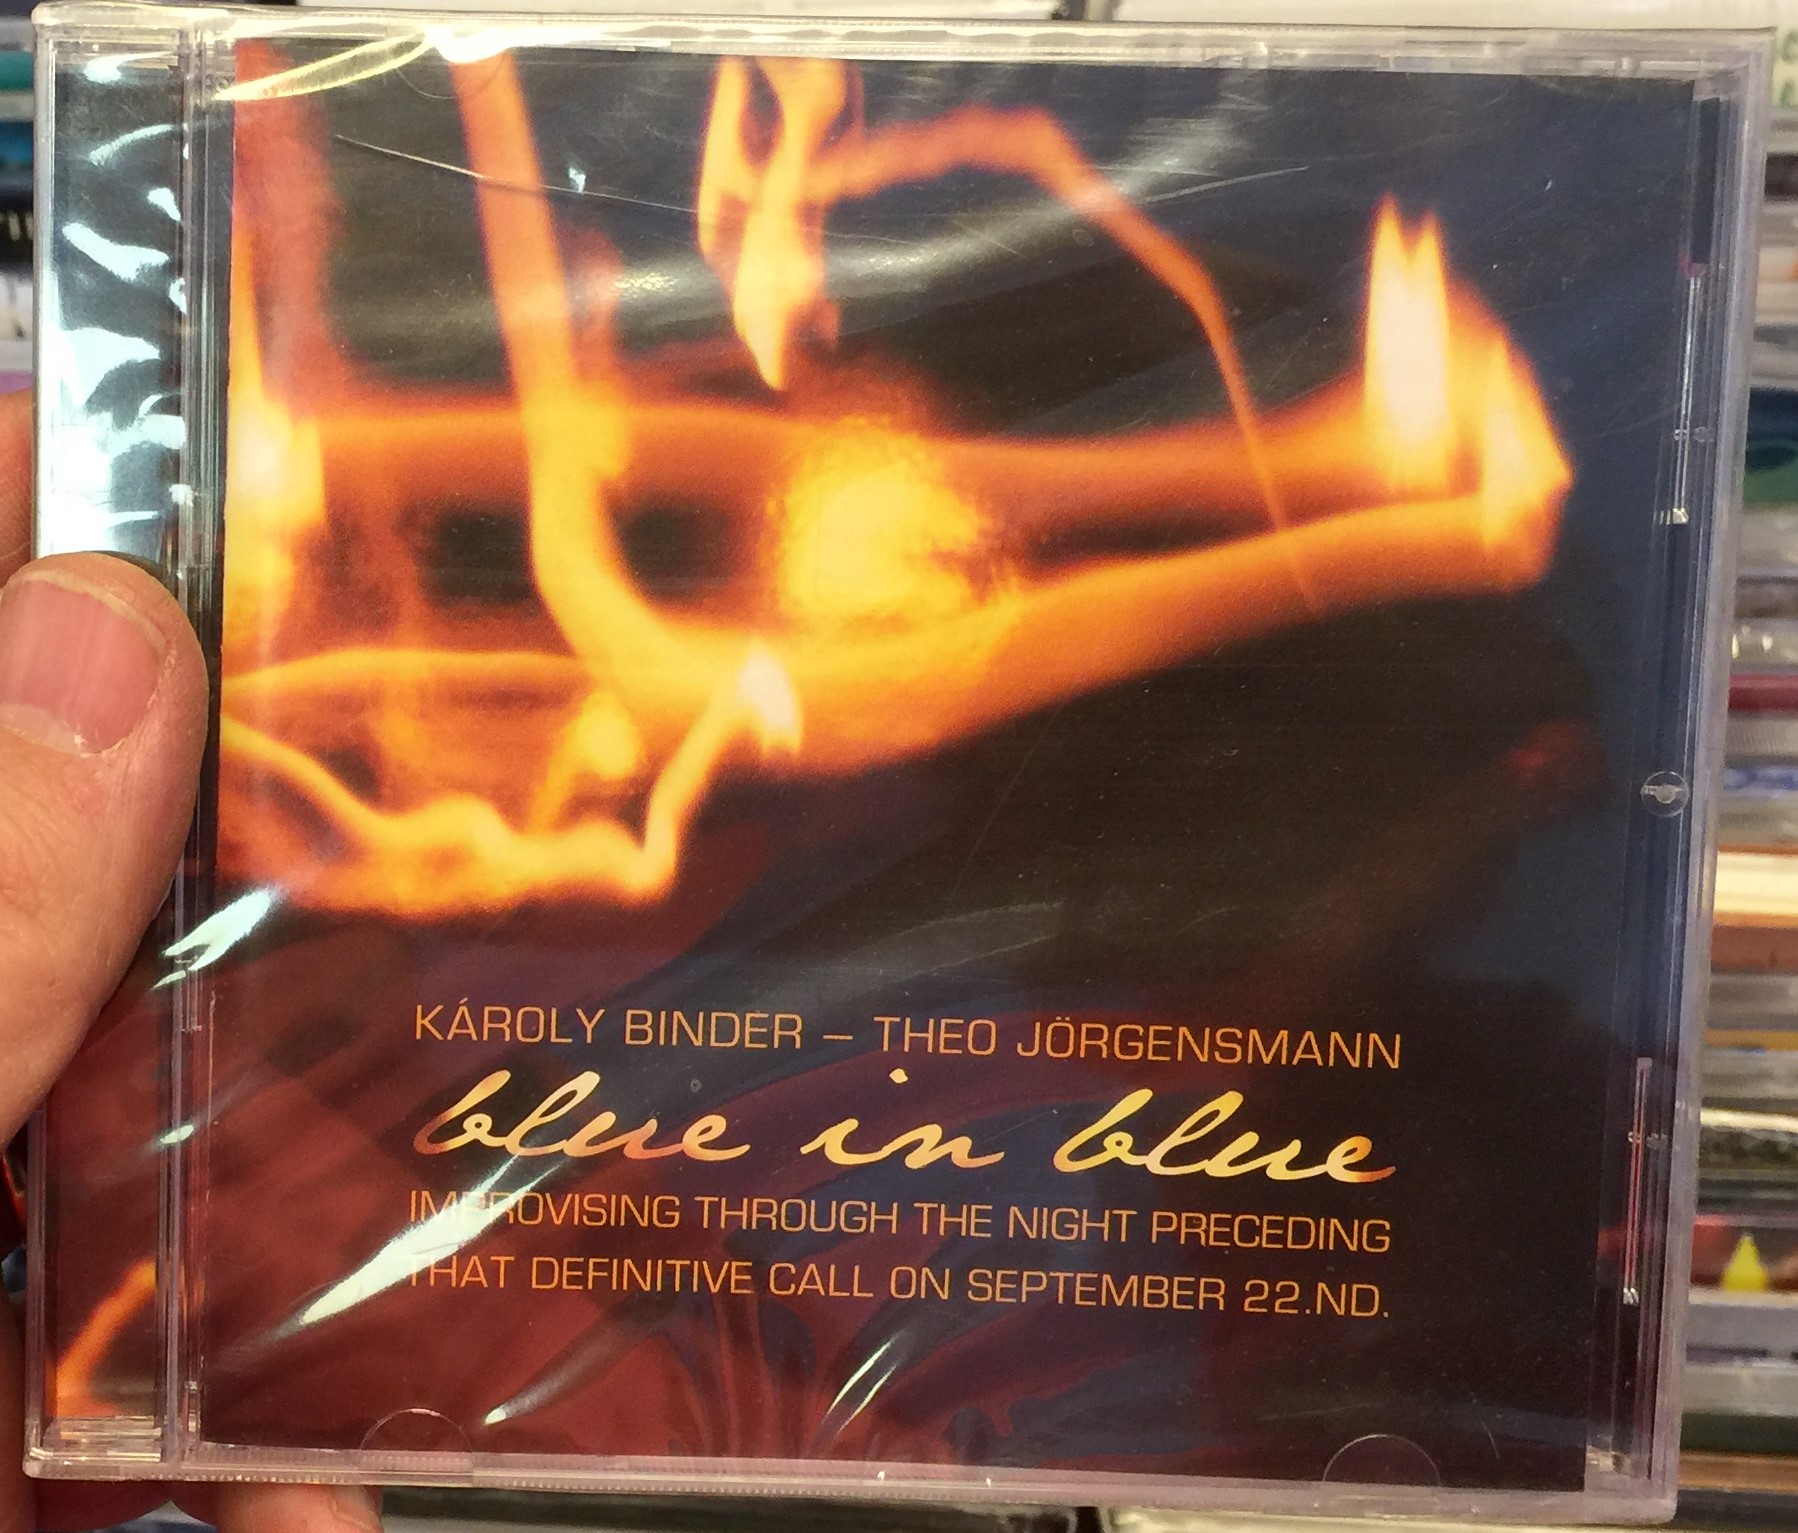 k-roly-binder-theo-j-rgensmann-blue-in-blue-improvising-through-the-night-preceding-that-definitive-call-on-september-22.-nd.-binder-music-manufactory-audio-cd-2011-bmm-2011-8238-1-.jpg